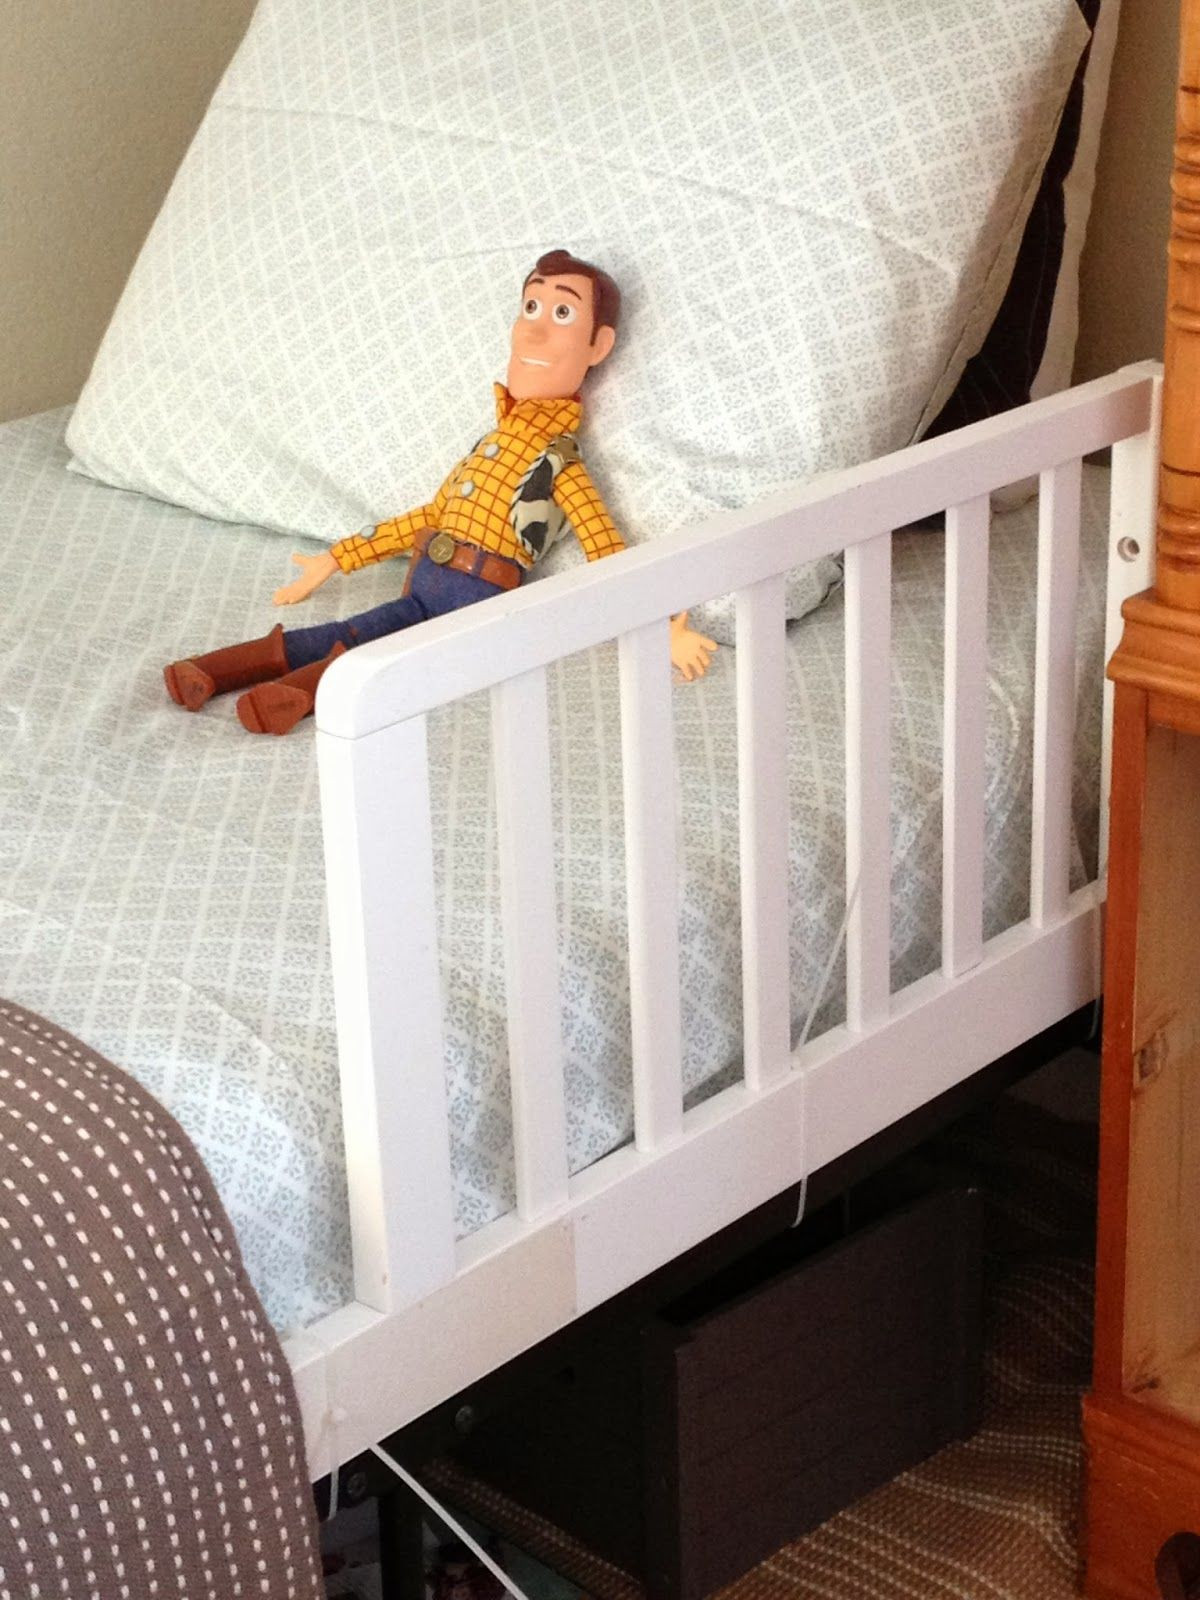 DIY Bed Rails For Toddler
 Diy safety rail for a toddler bed in 2019